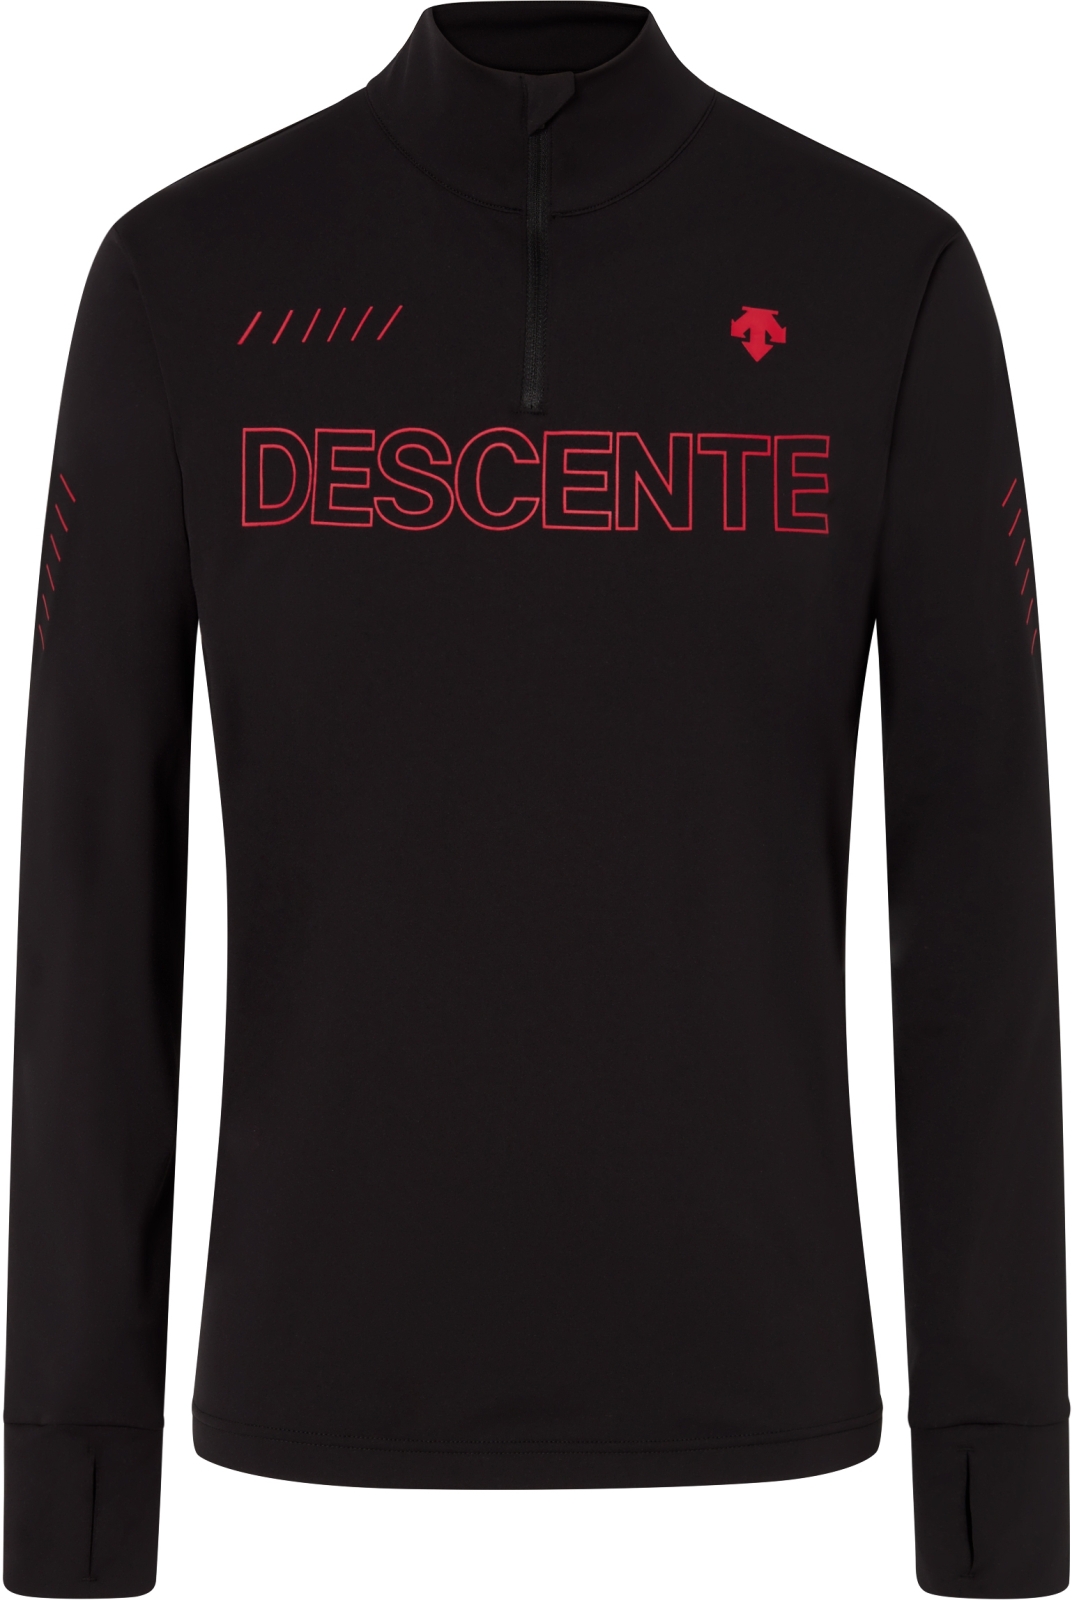 E-shop Descente Descente 1/4 Zip T-Neck - Black S